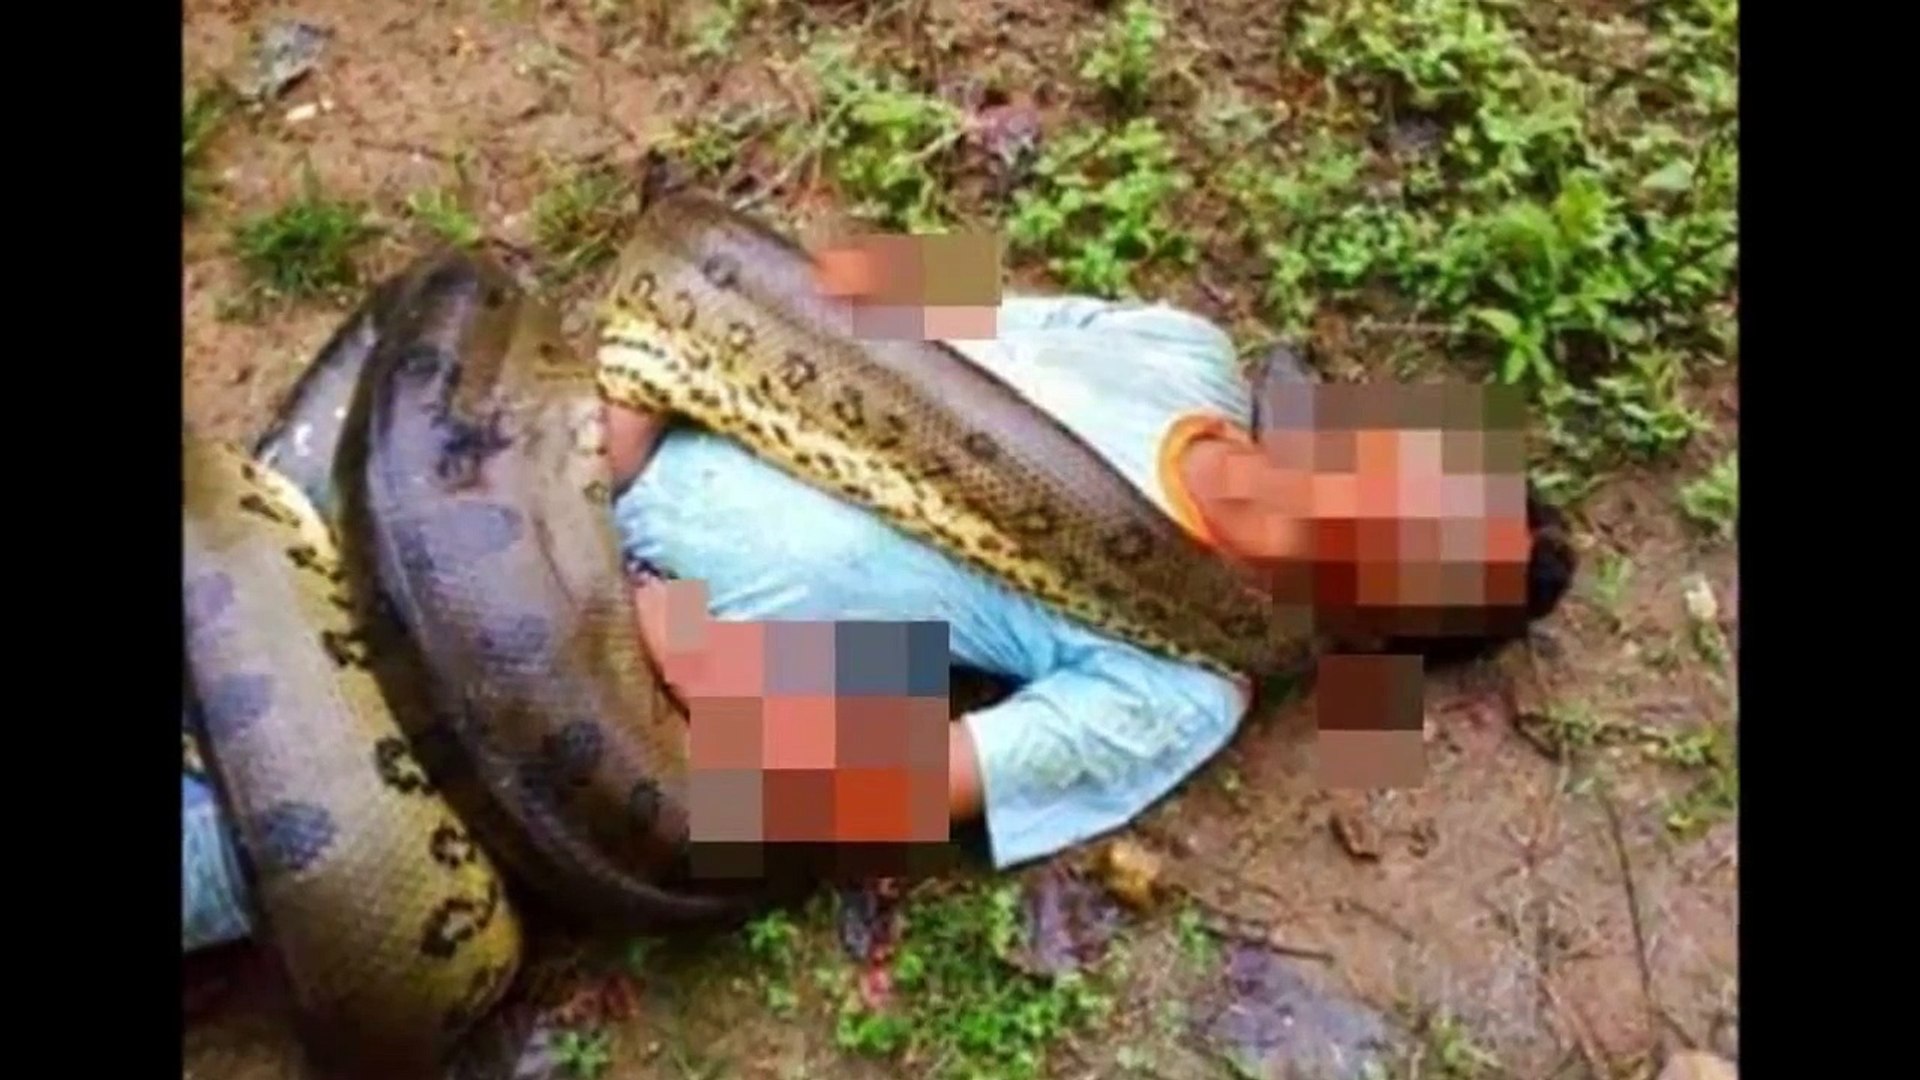 Anaconda eat human alive